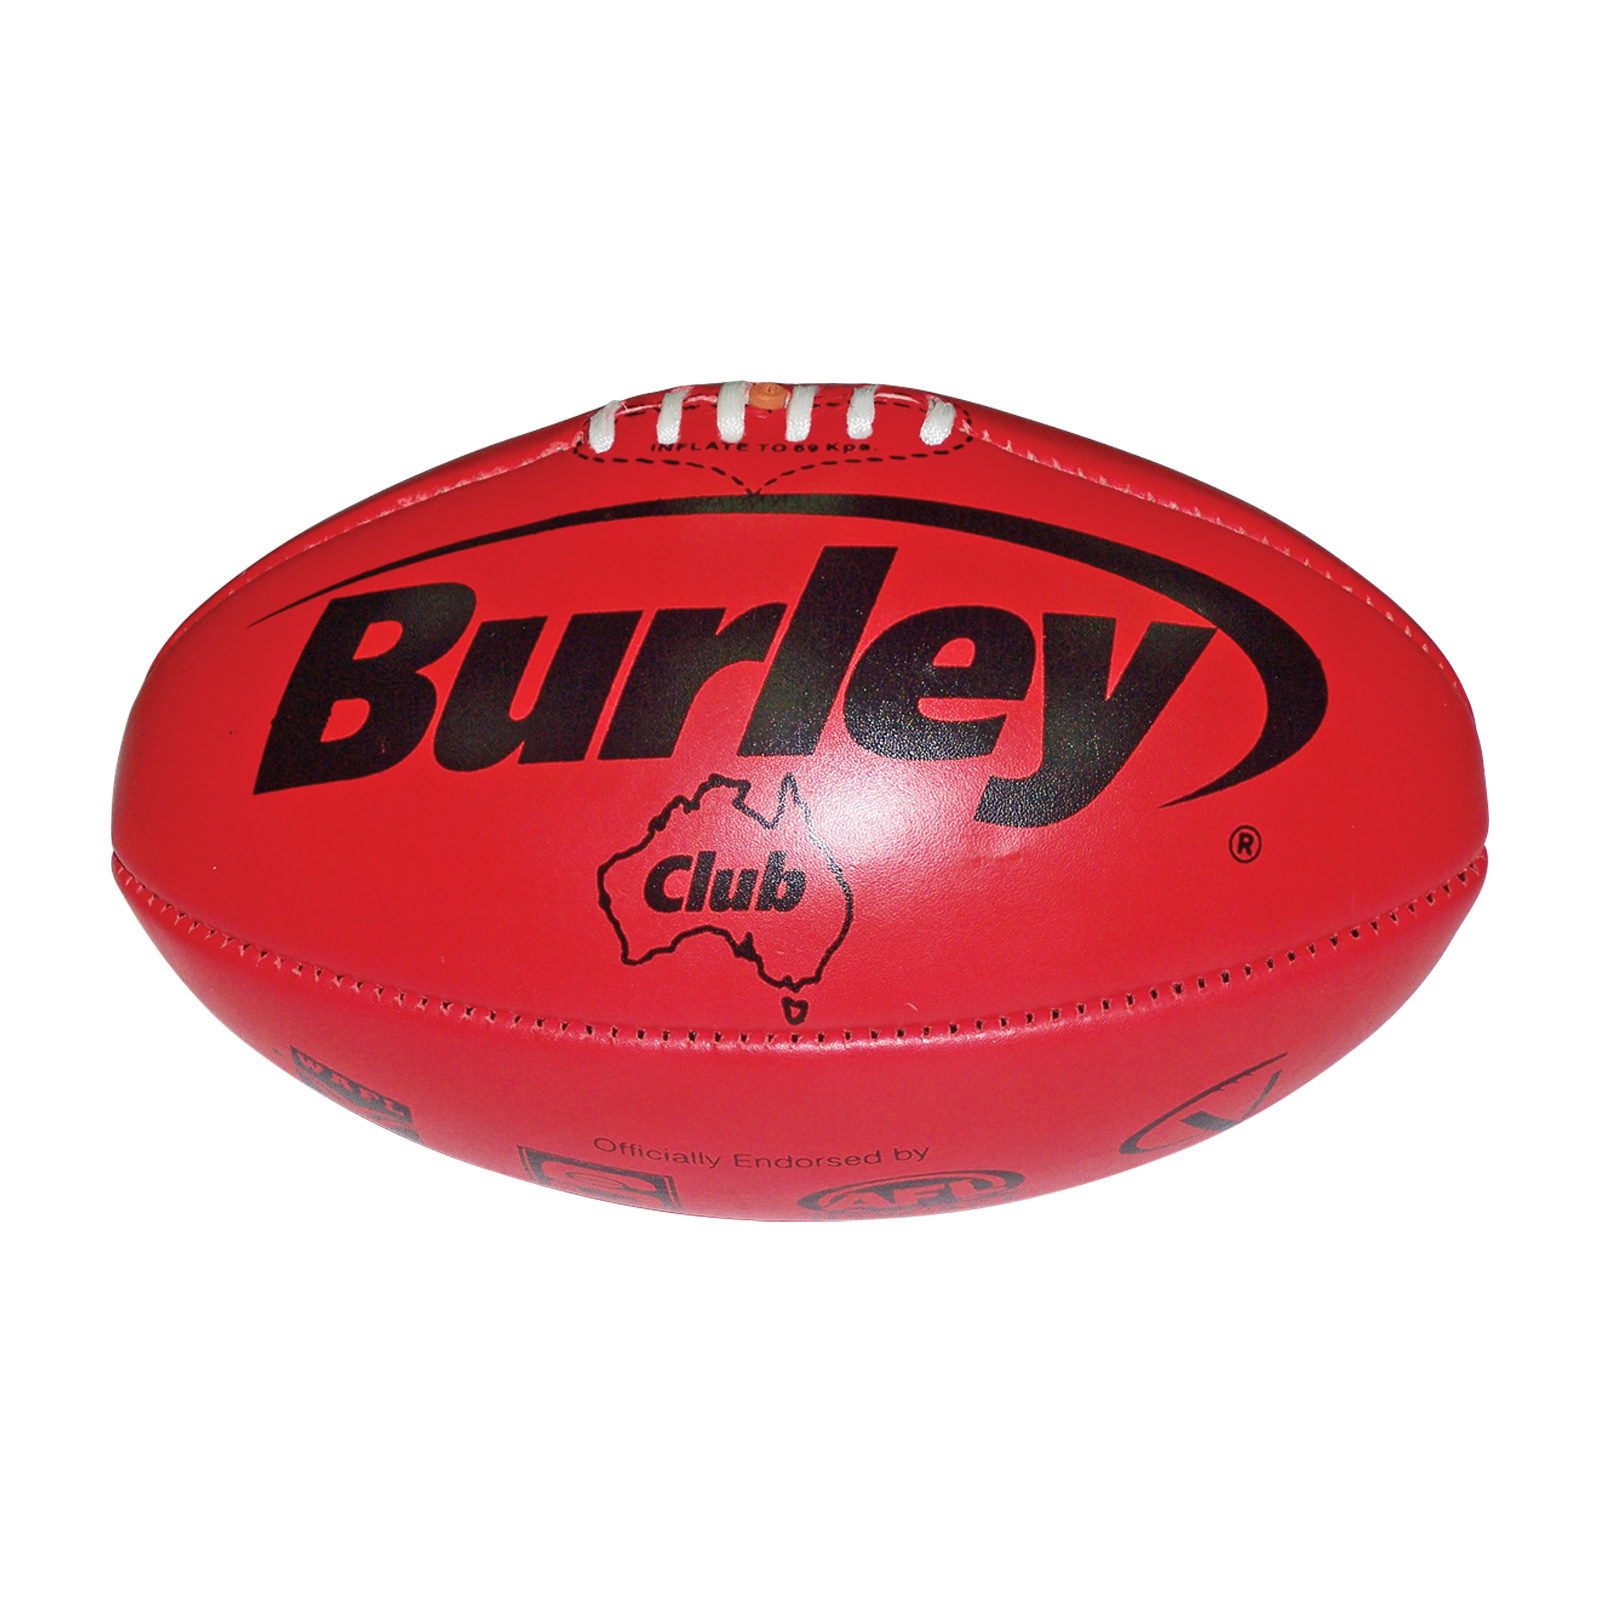 Football Burley Club Red Size 3